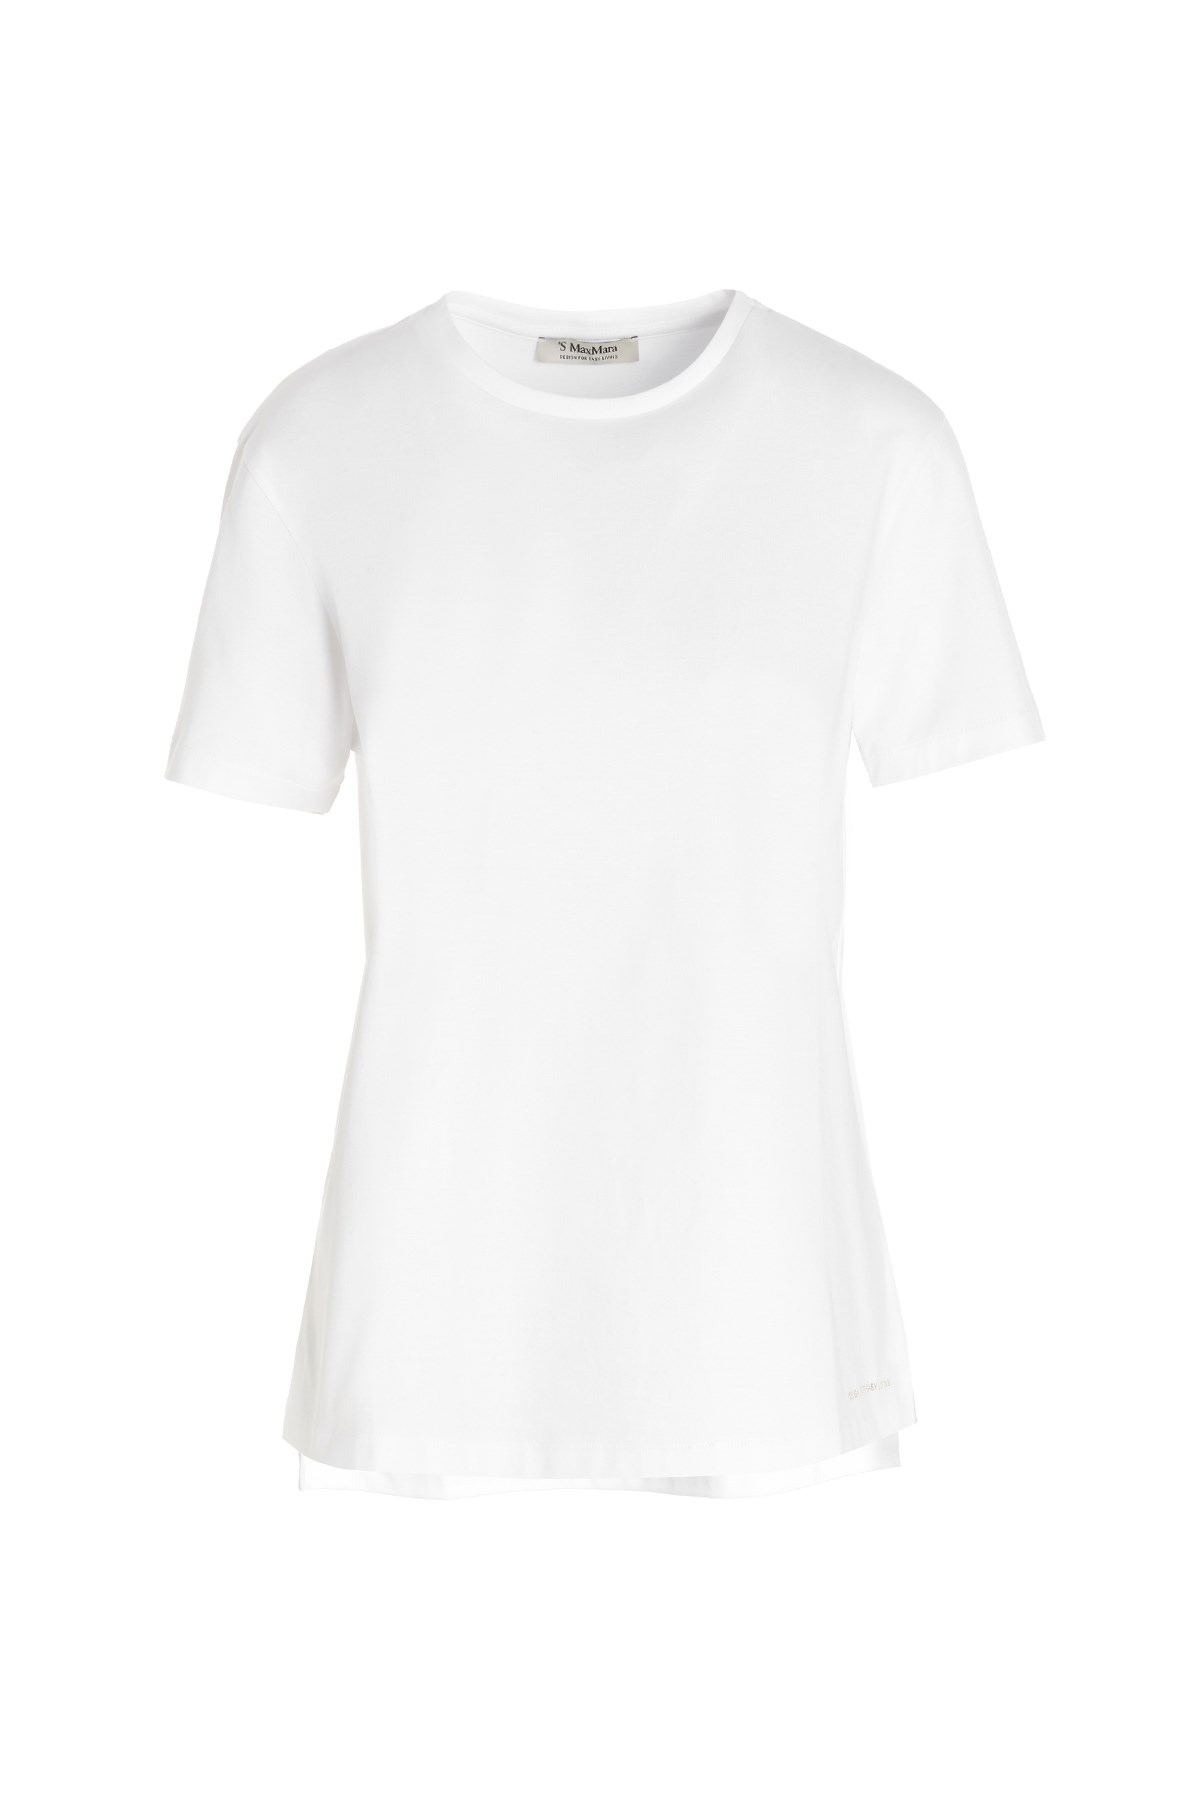 MAX MARA 'S 'Acqui’ T-Shirt